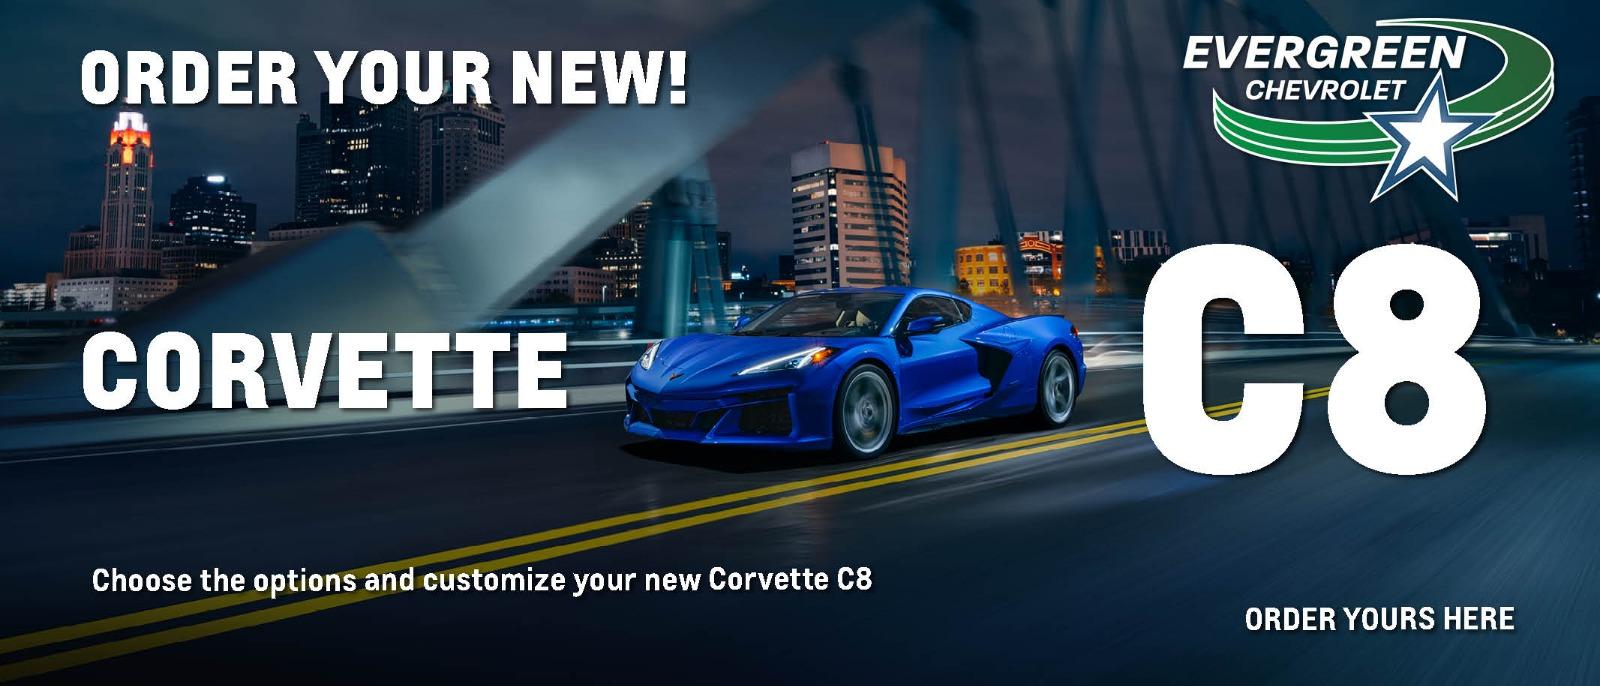 Reserve your new Corvette